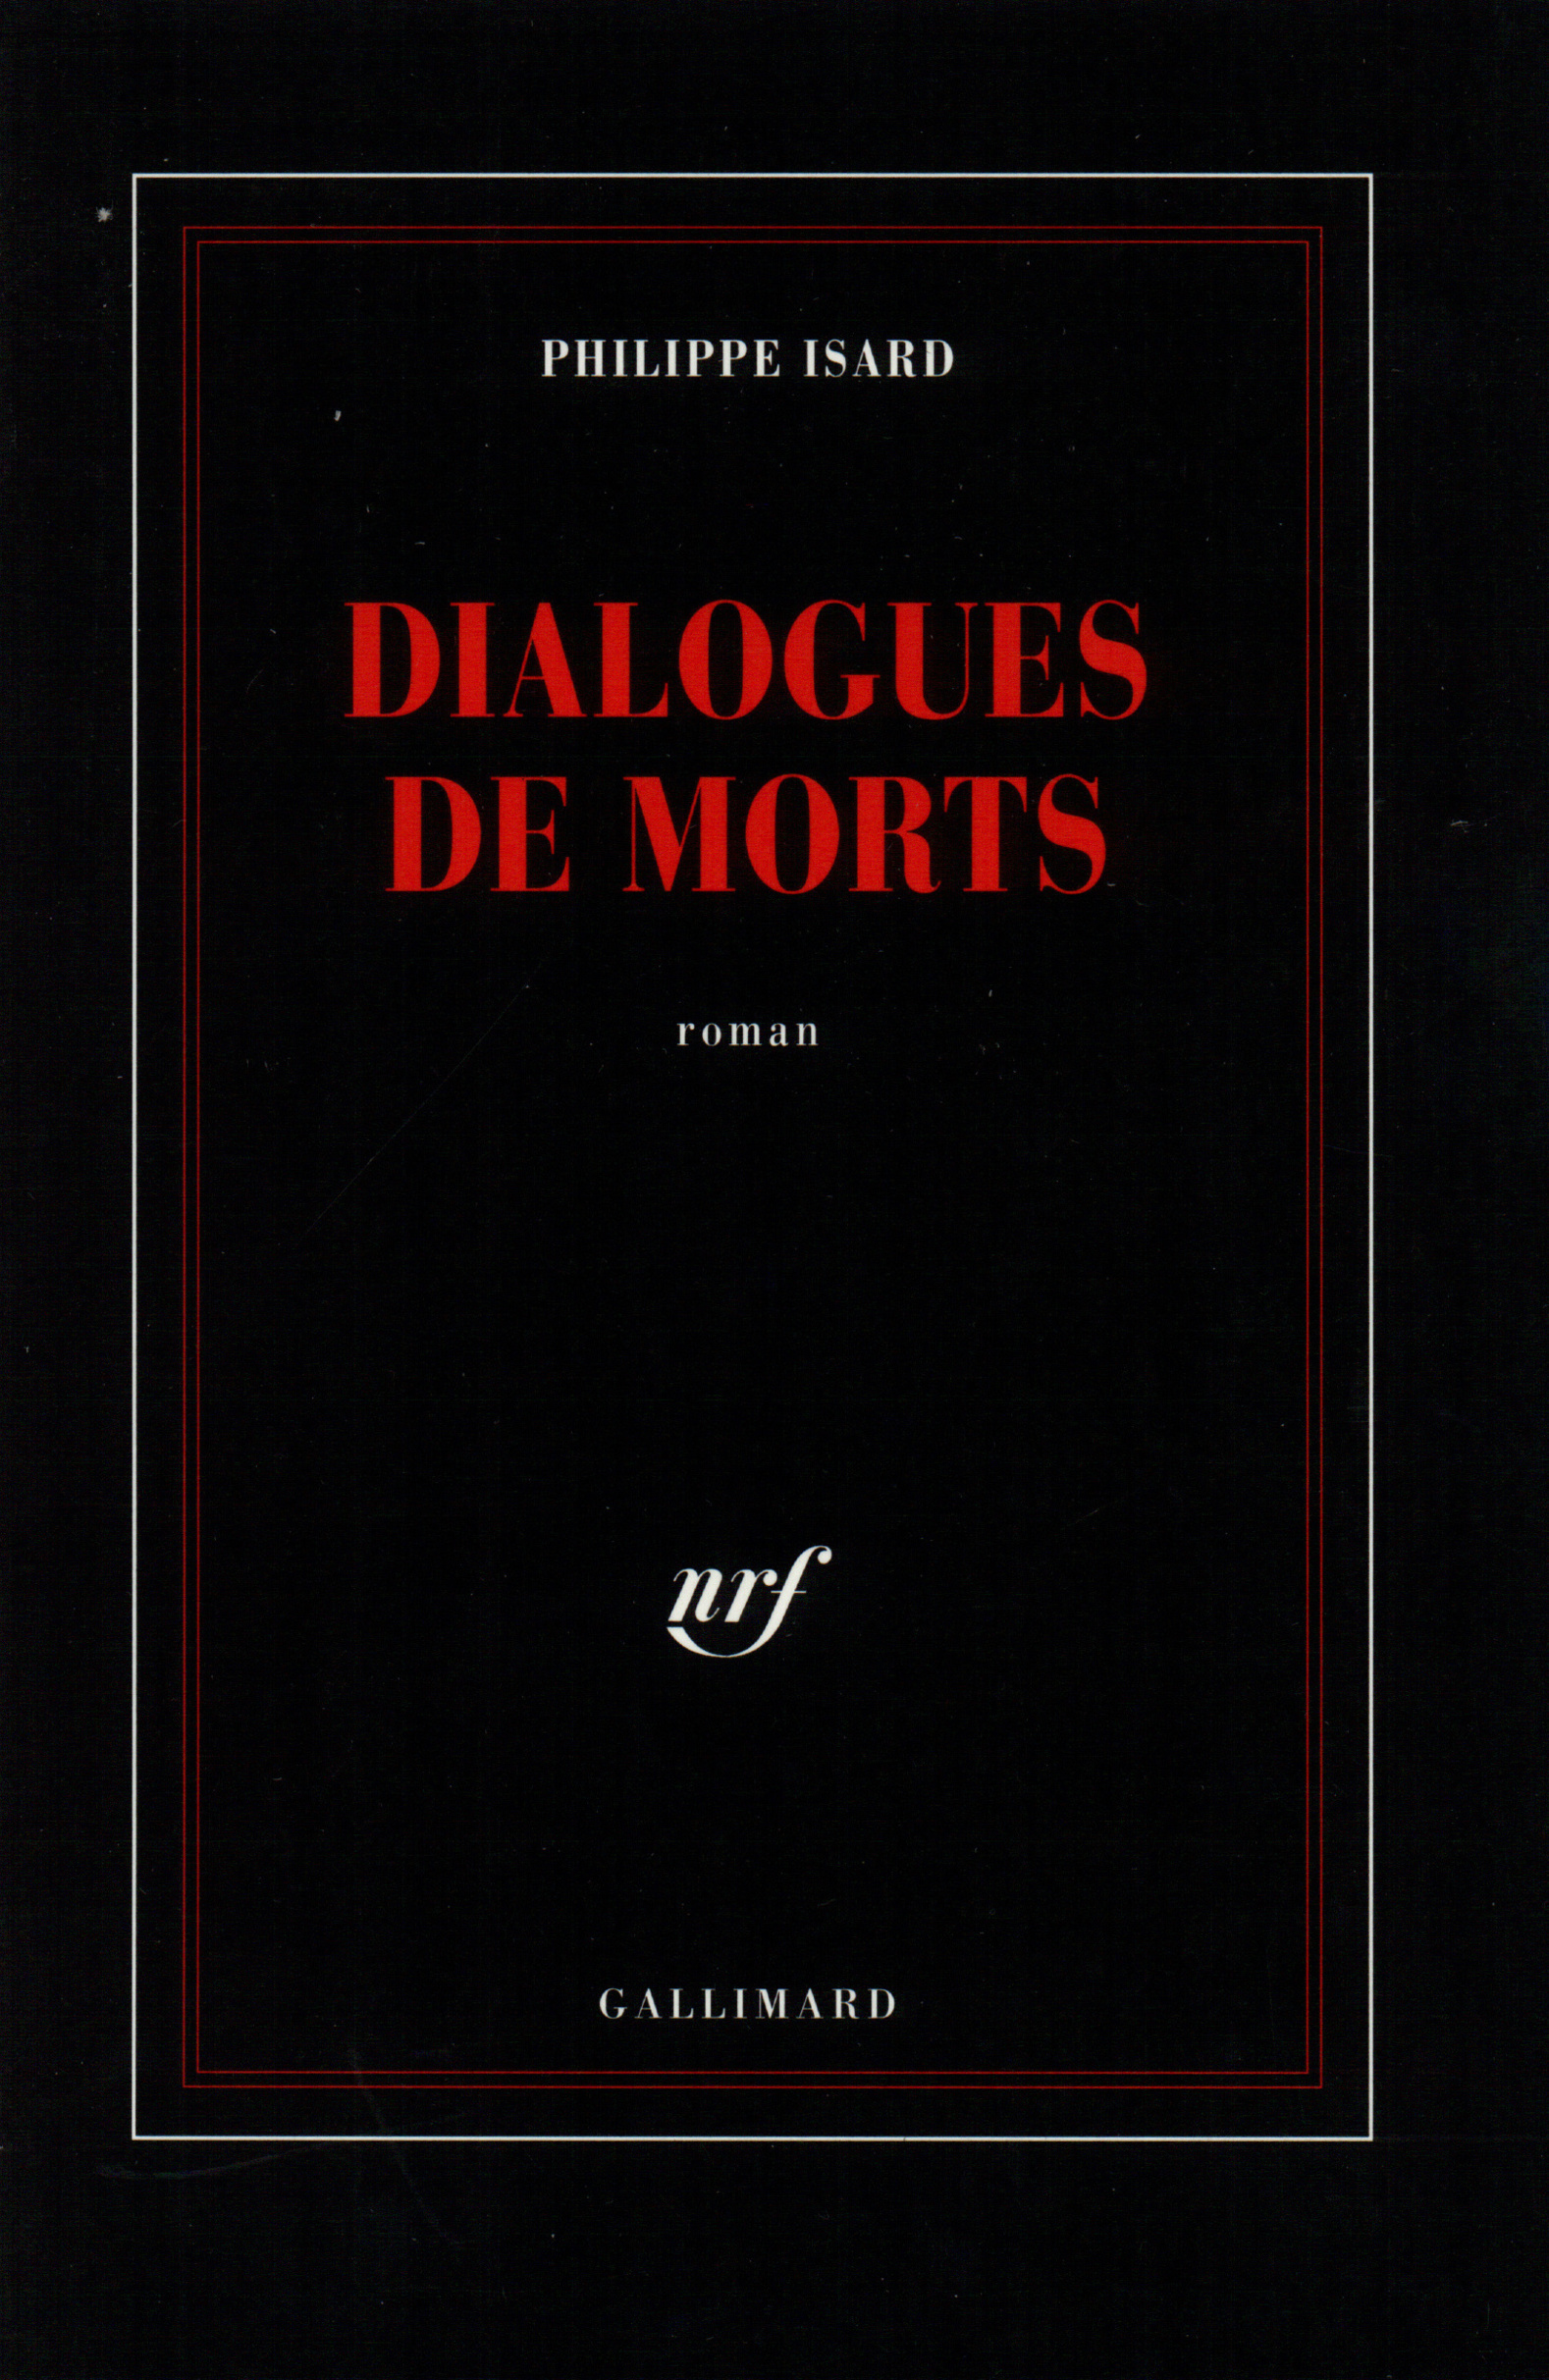 Dialogues de morts (9782070741632-front-cover)